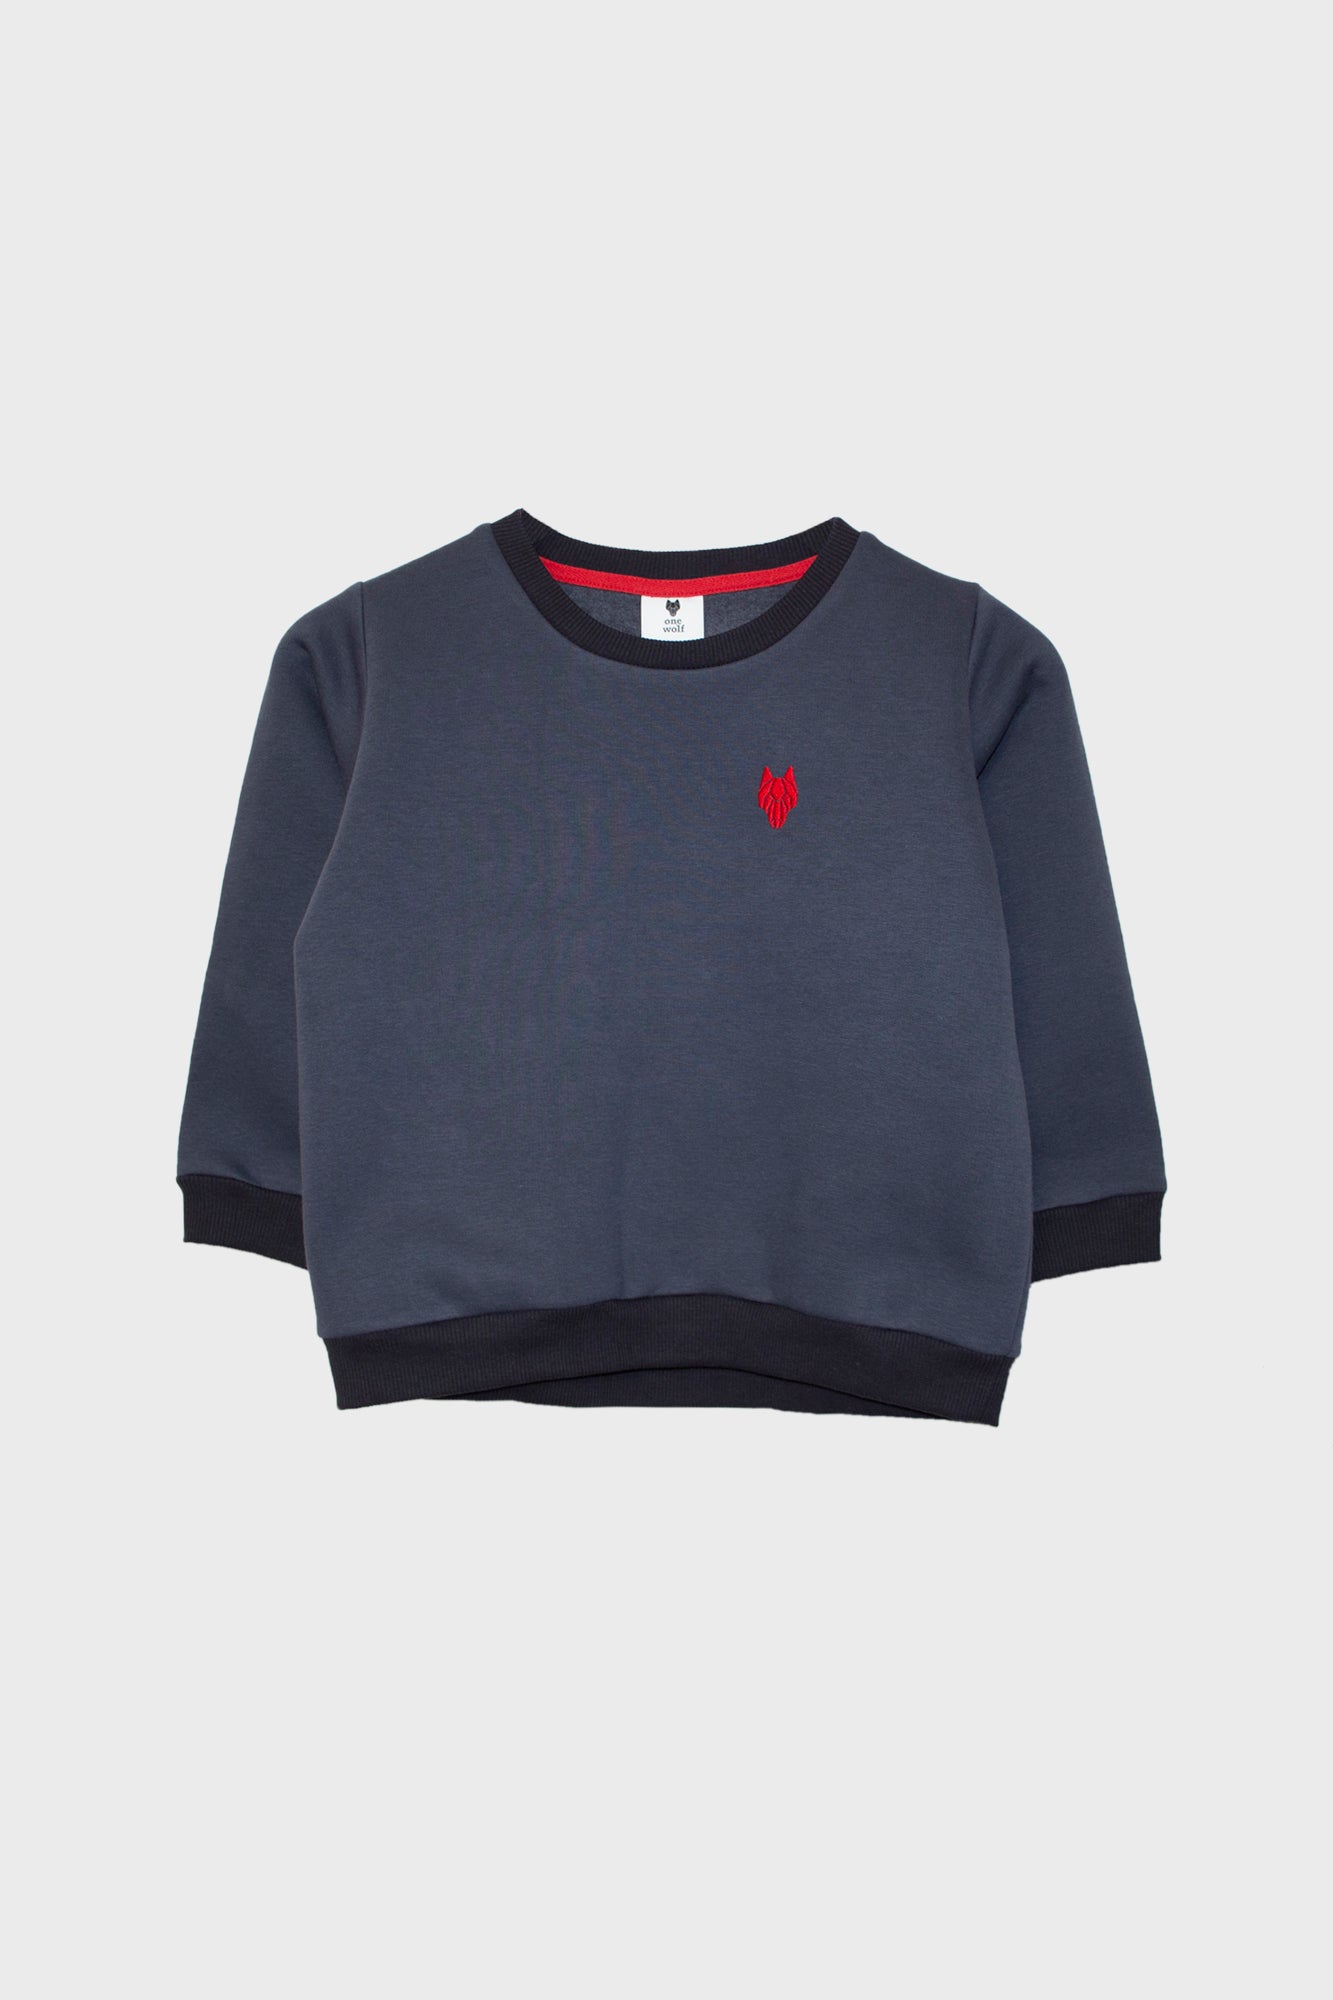 Bērnu One Wolf džemperis, tumši pelēks ar sarkanu logo